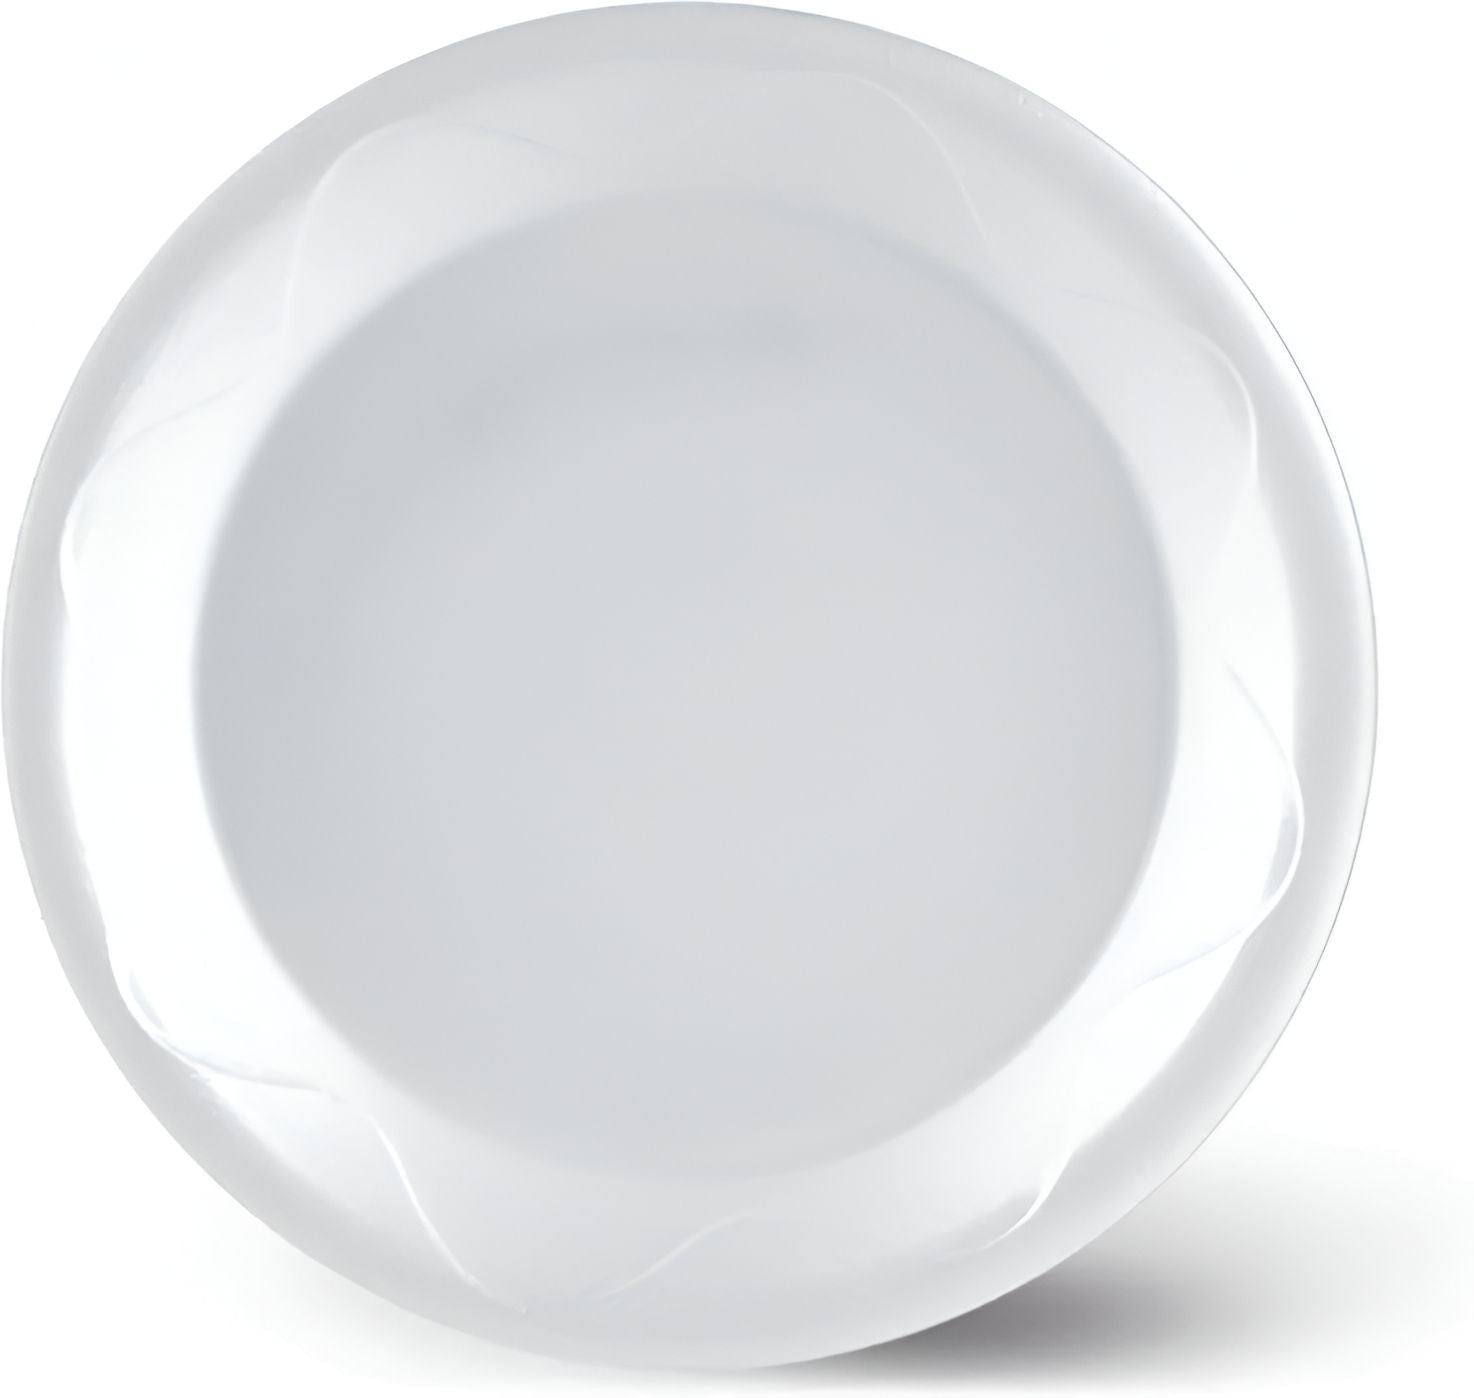 Darnel - 9" White Foam Plates, 500/Cs - DU5009101